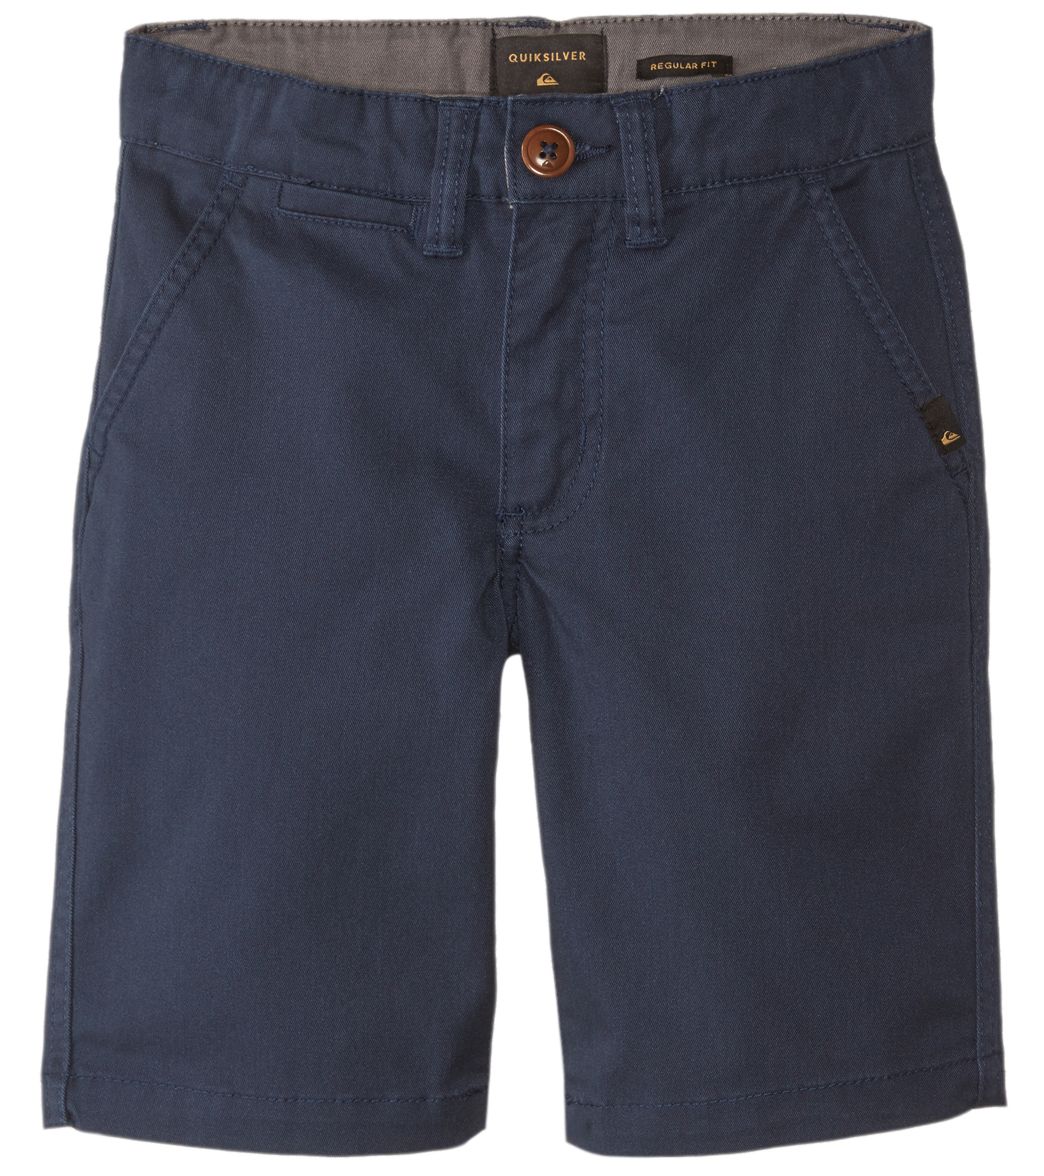 Quiksilver Boys' Everyday Union Stretch Shorts 8-16 - Navy Blazer 27 Cotton/Polyester - Swimoutlet.com